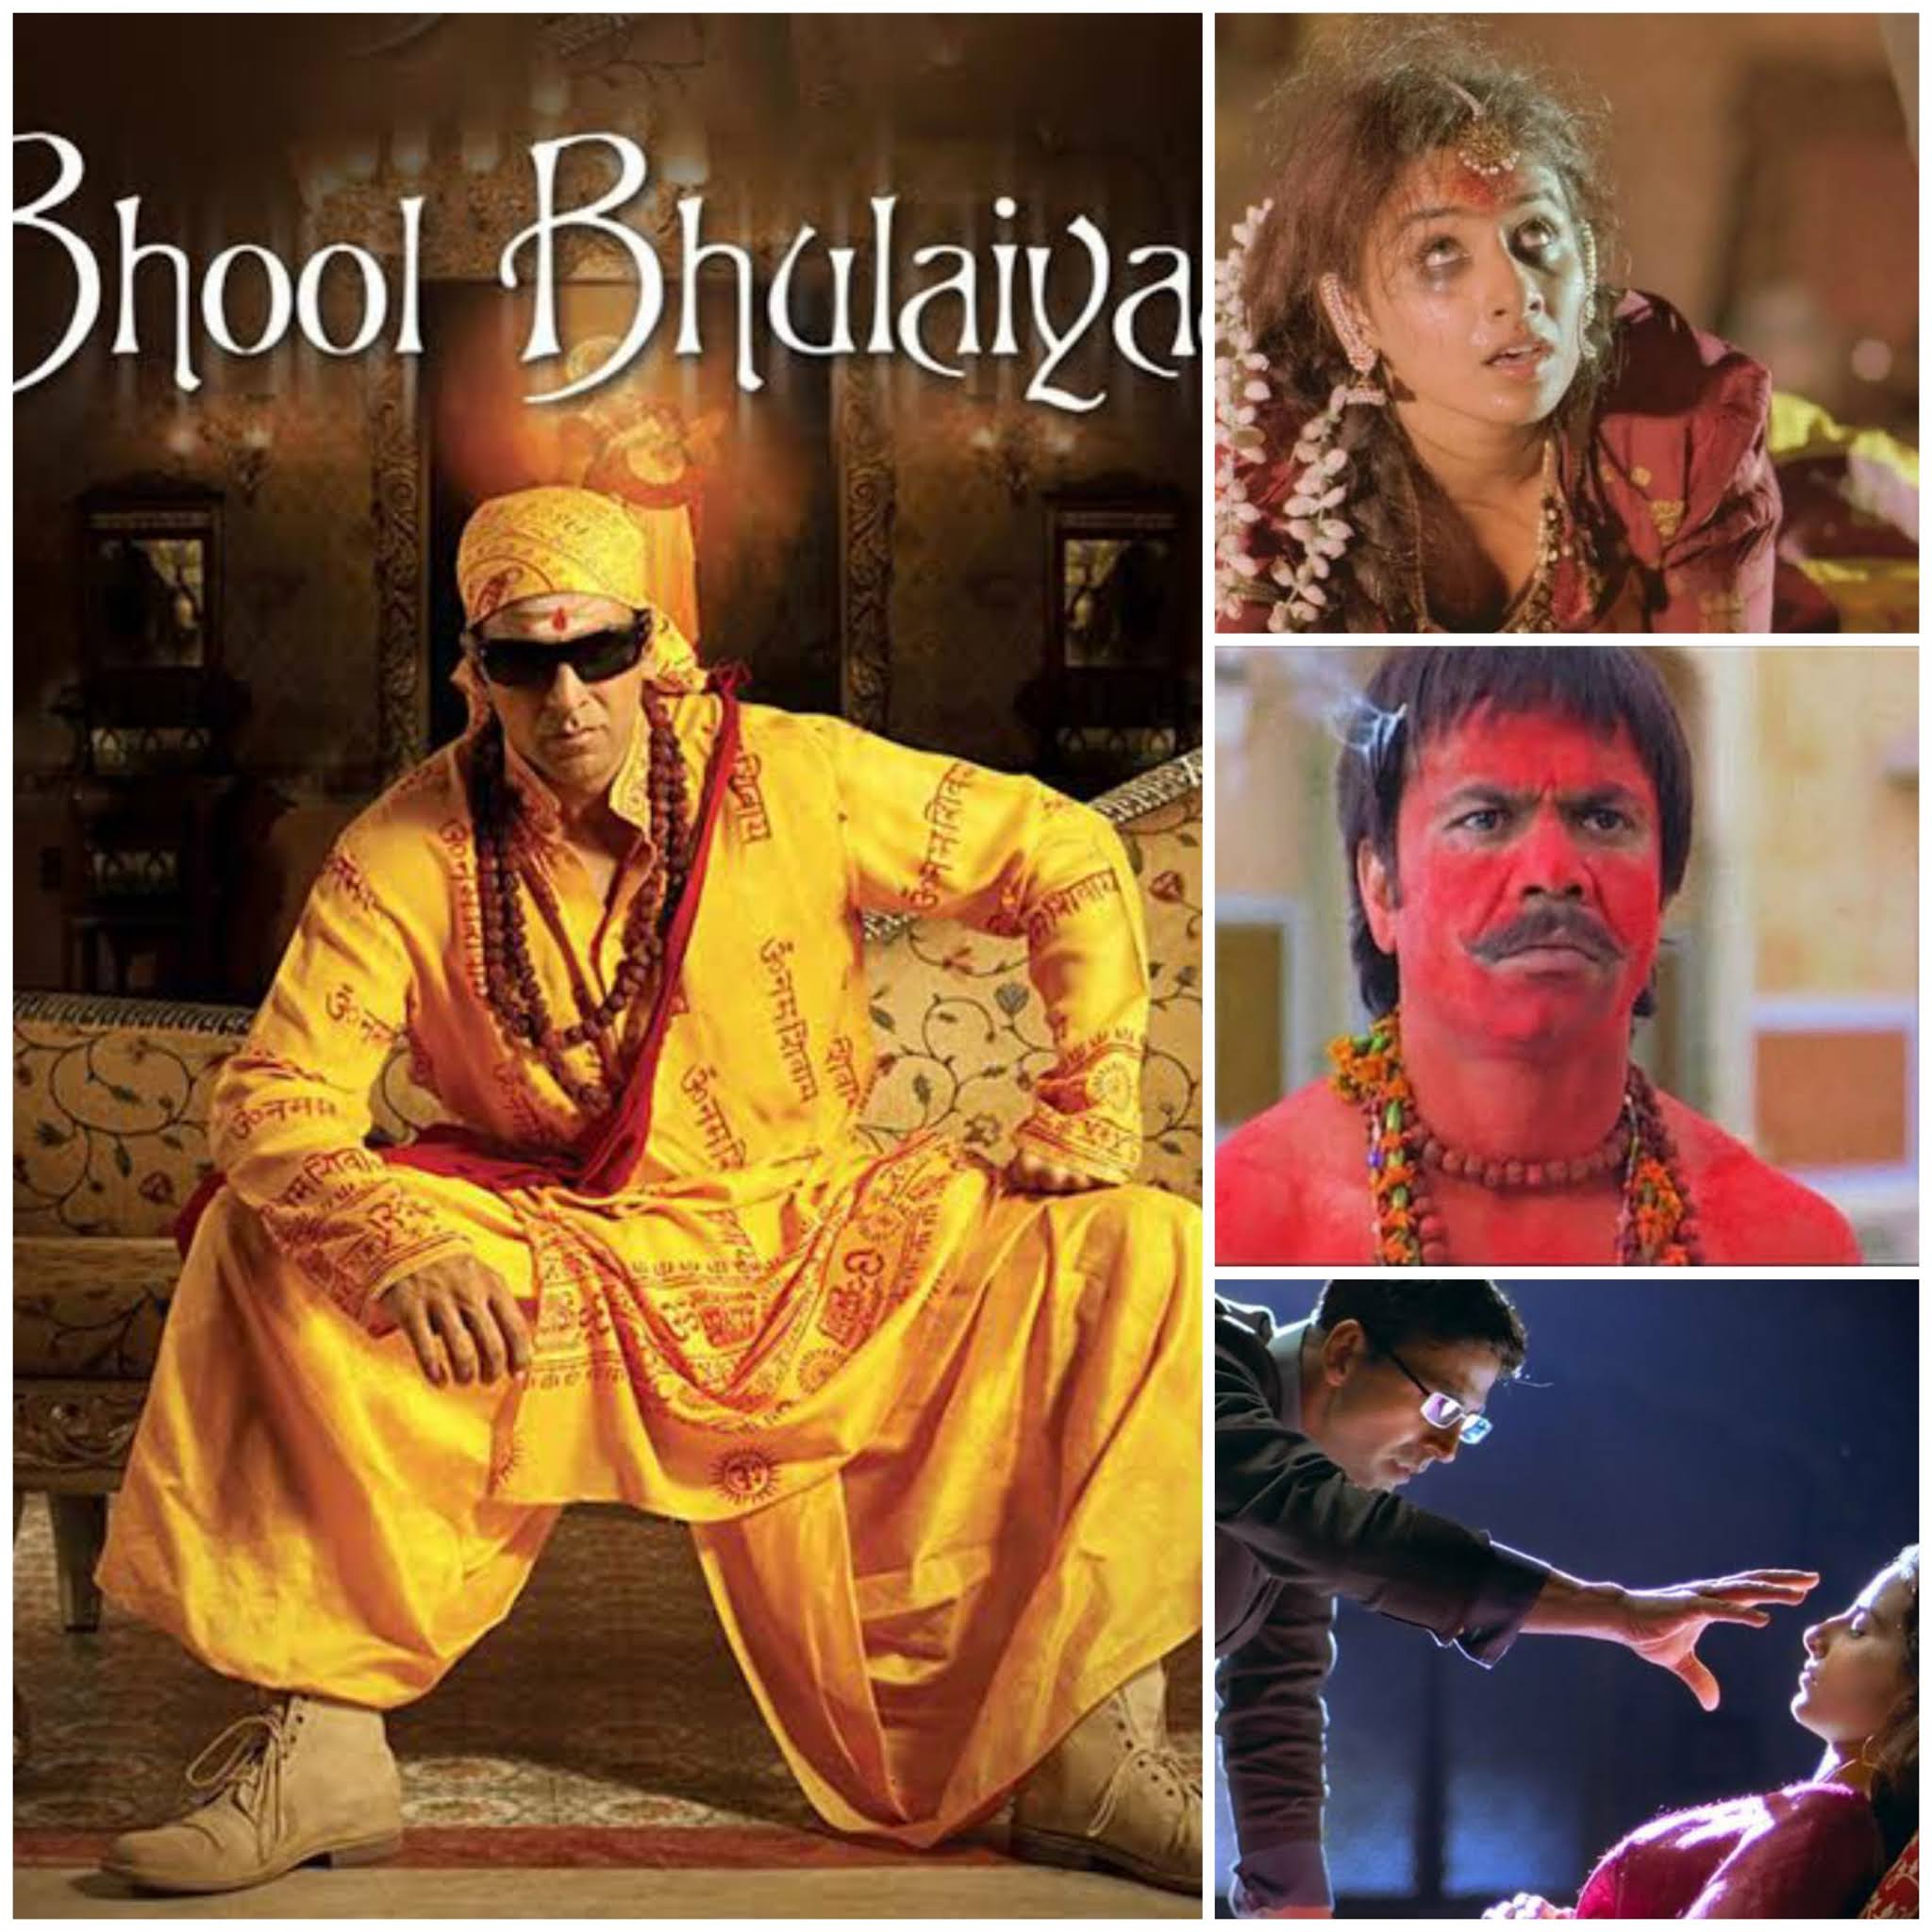 Bhool Bhulaiyaa Full Movie